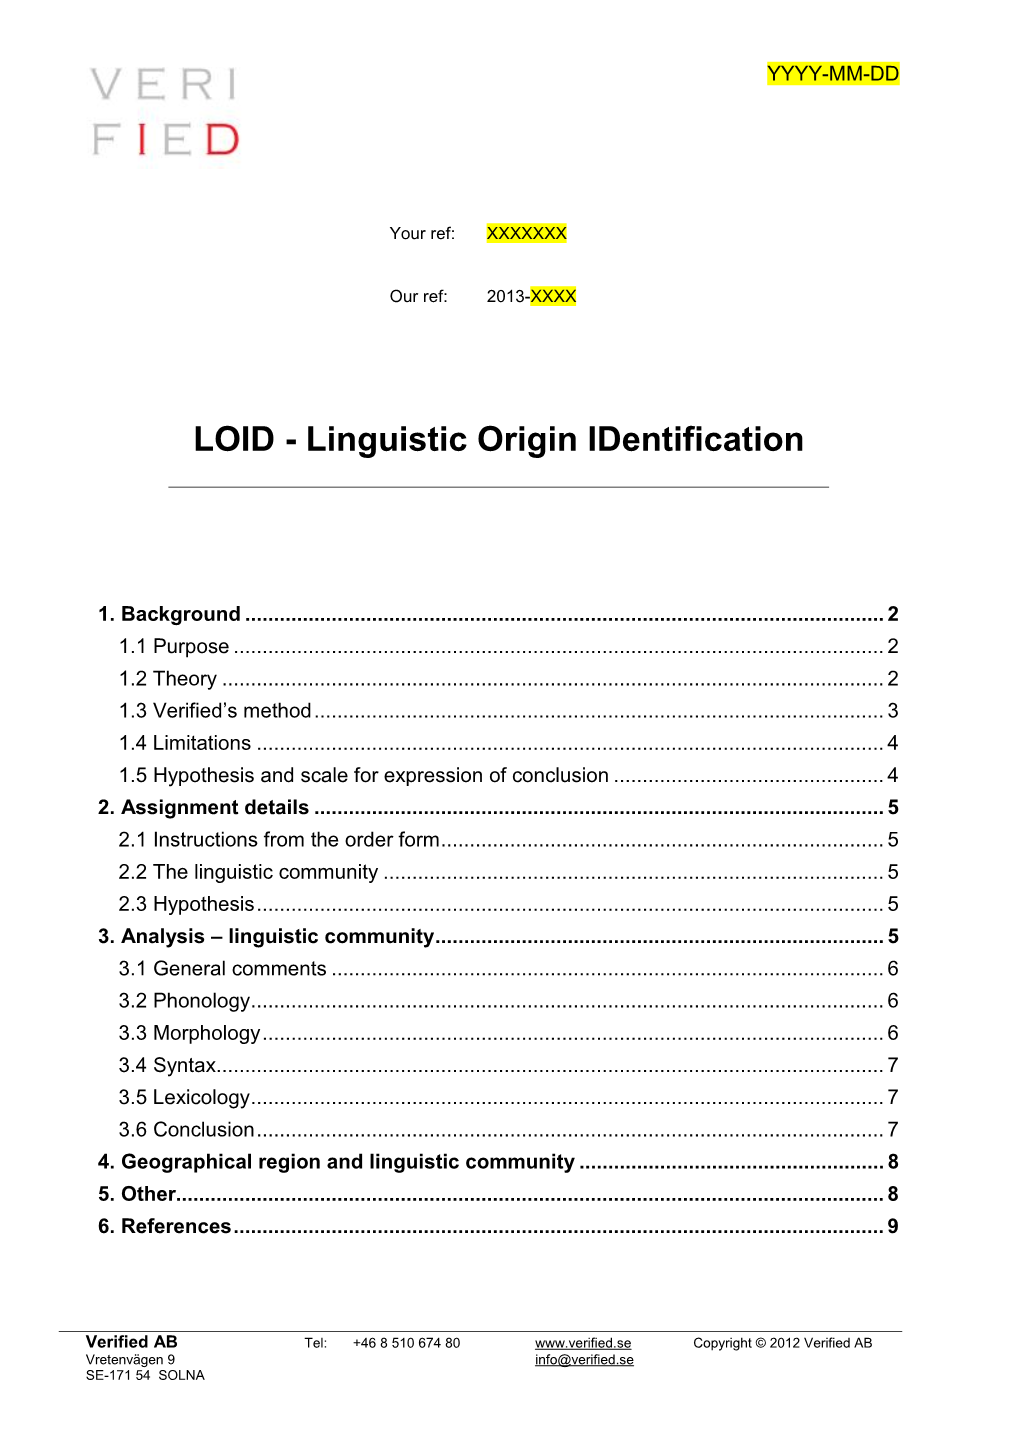 LOID - Linguistic Origin Identification